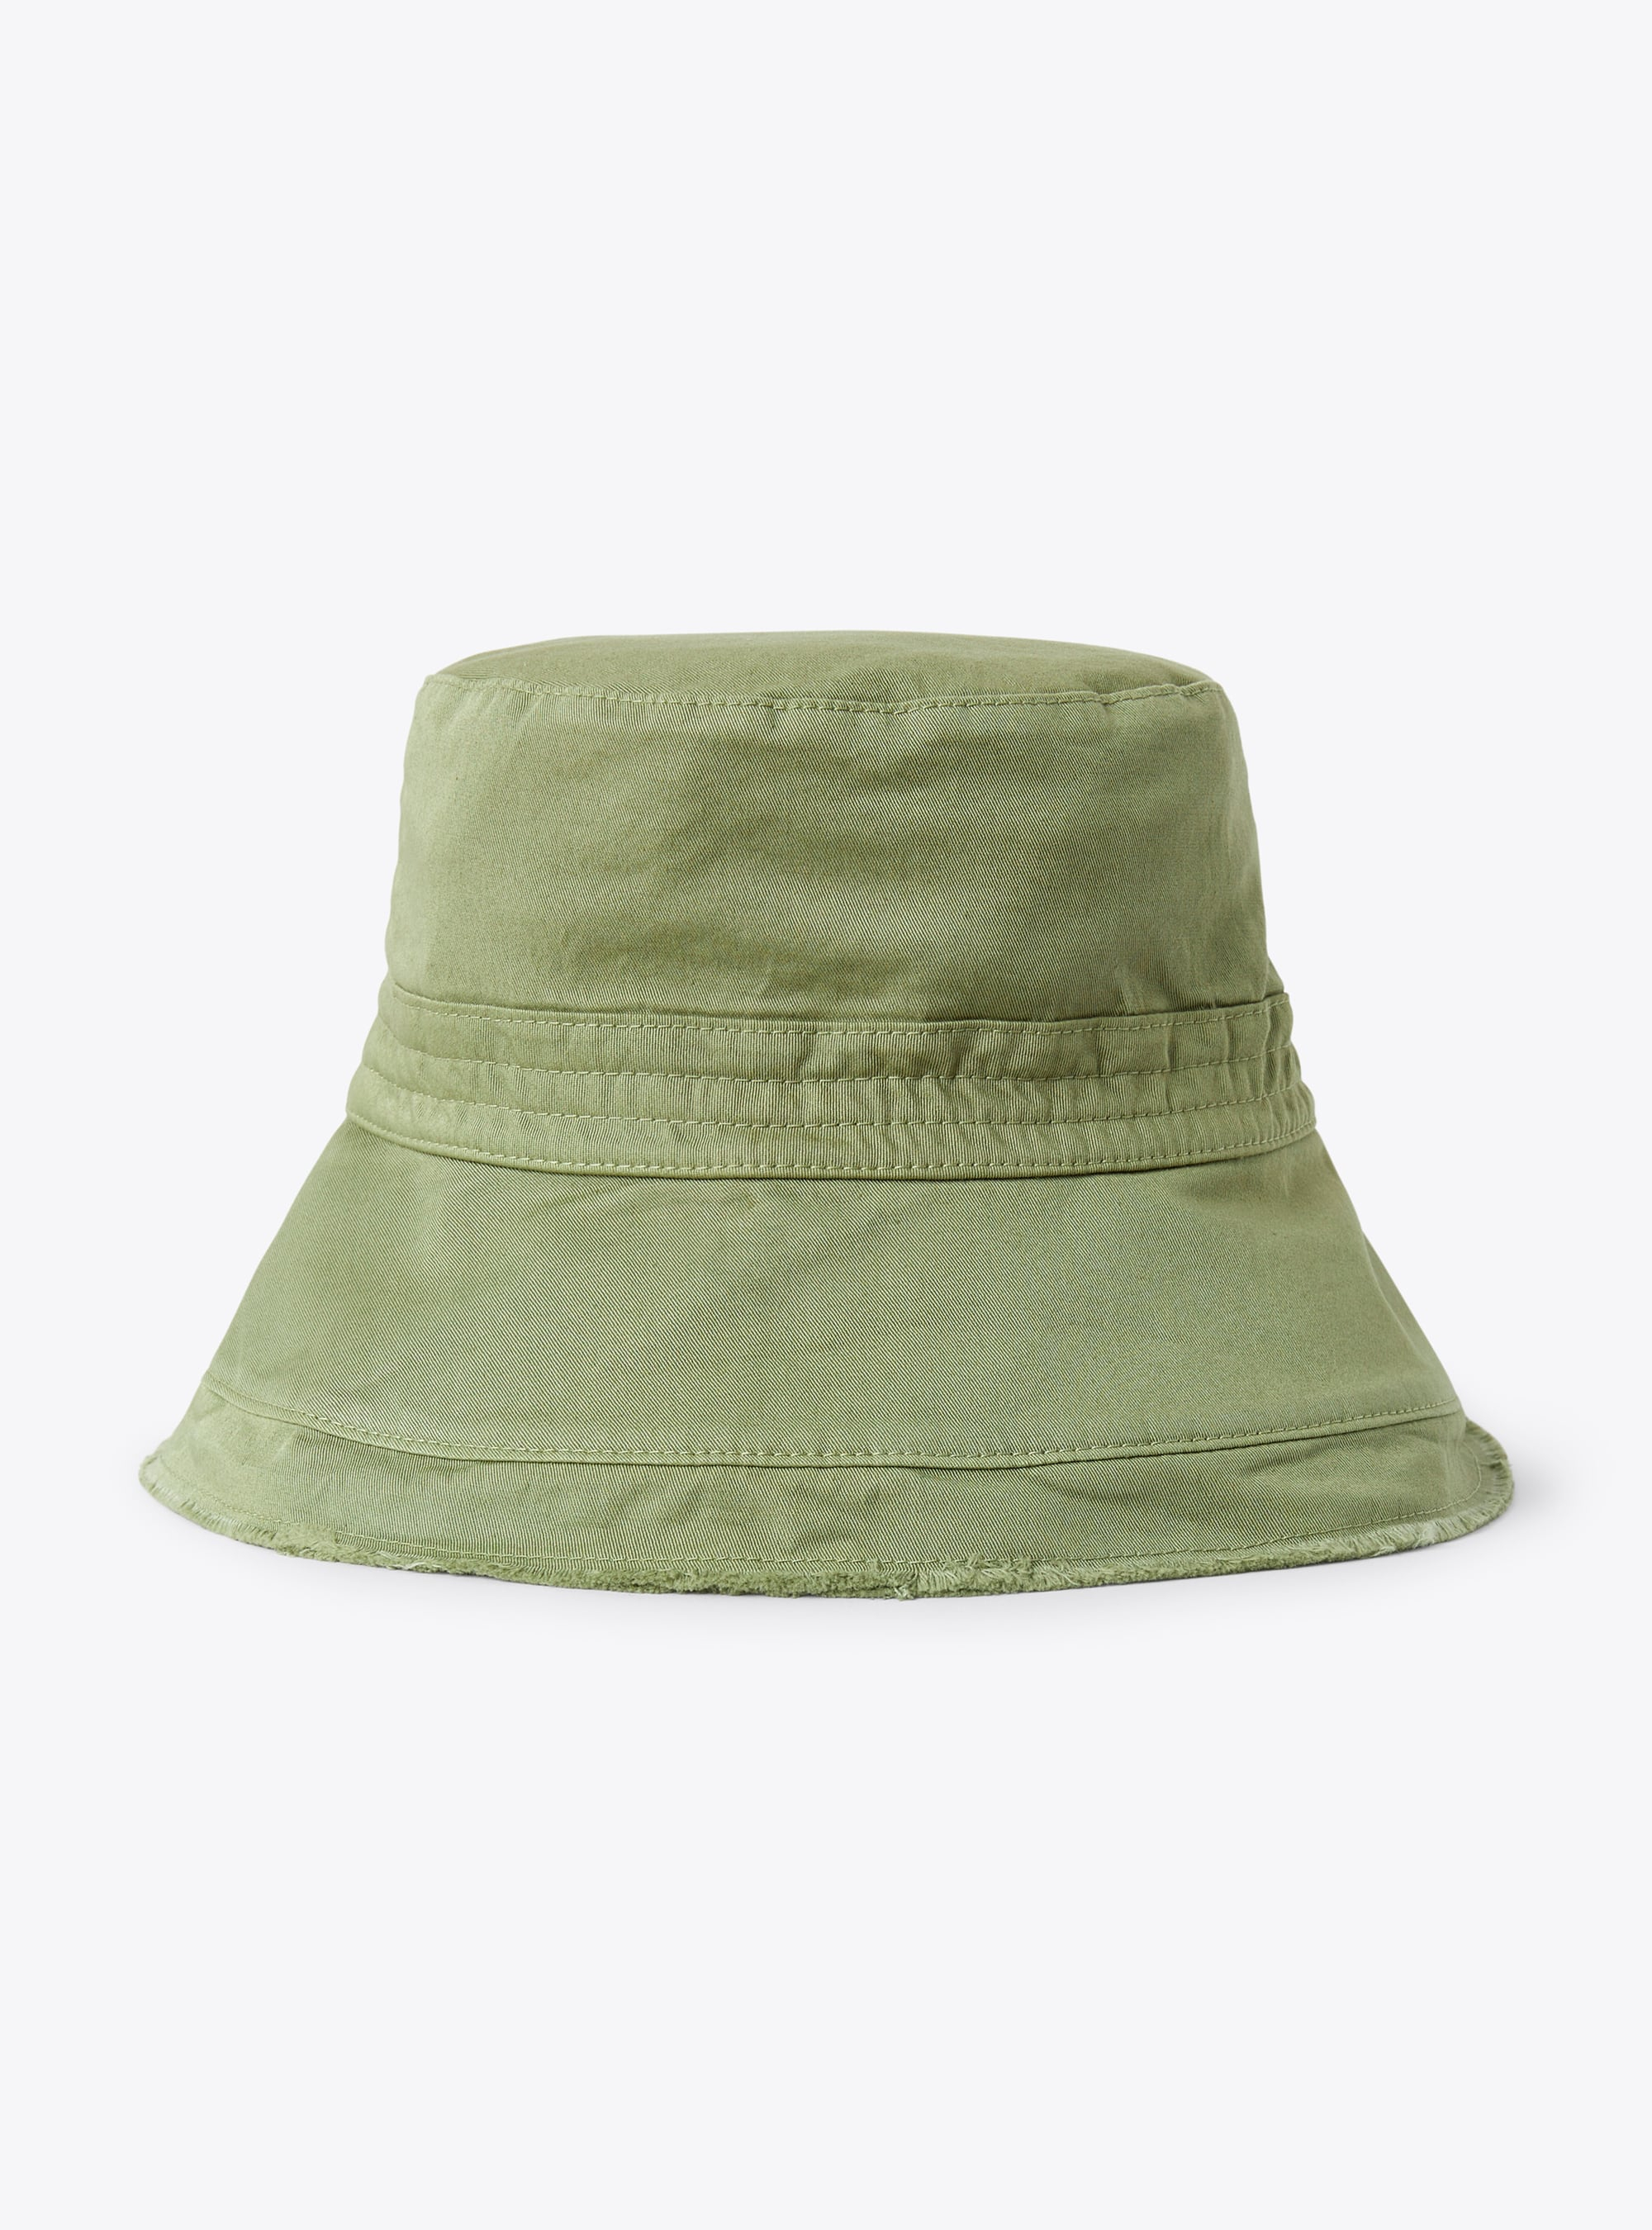 Fisherman’s hat in sage-green gabardine - Accessories - Il Gufo